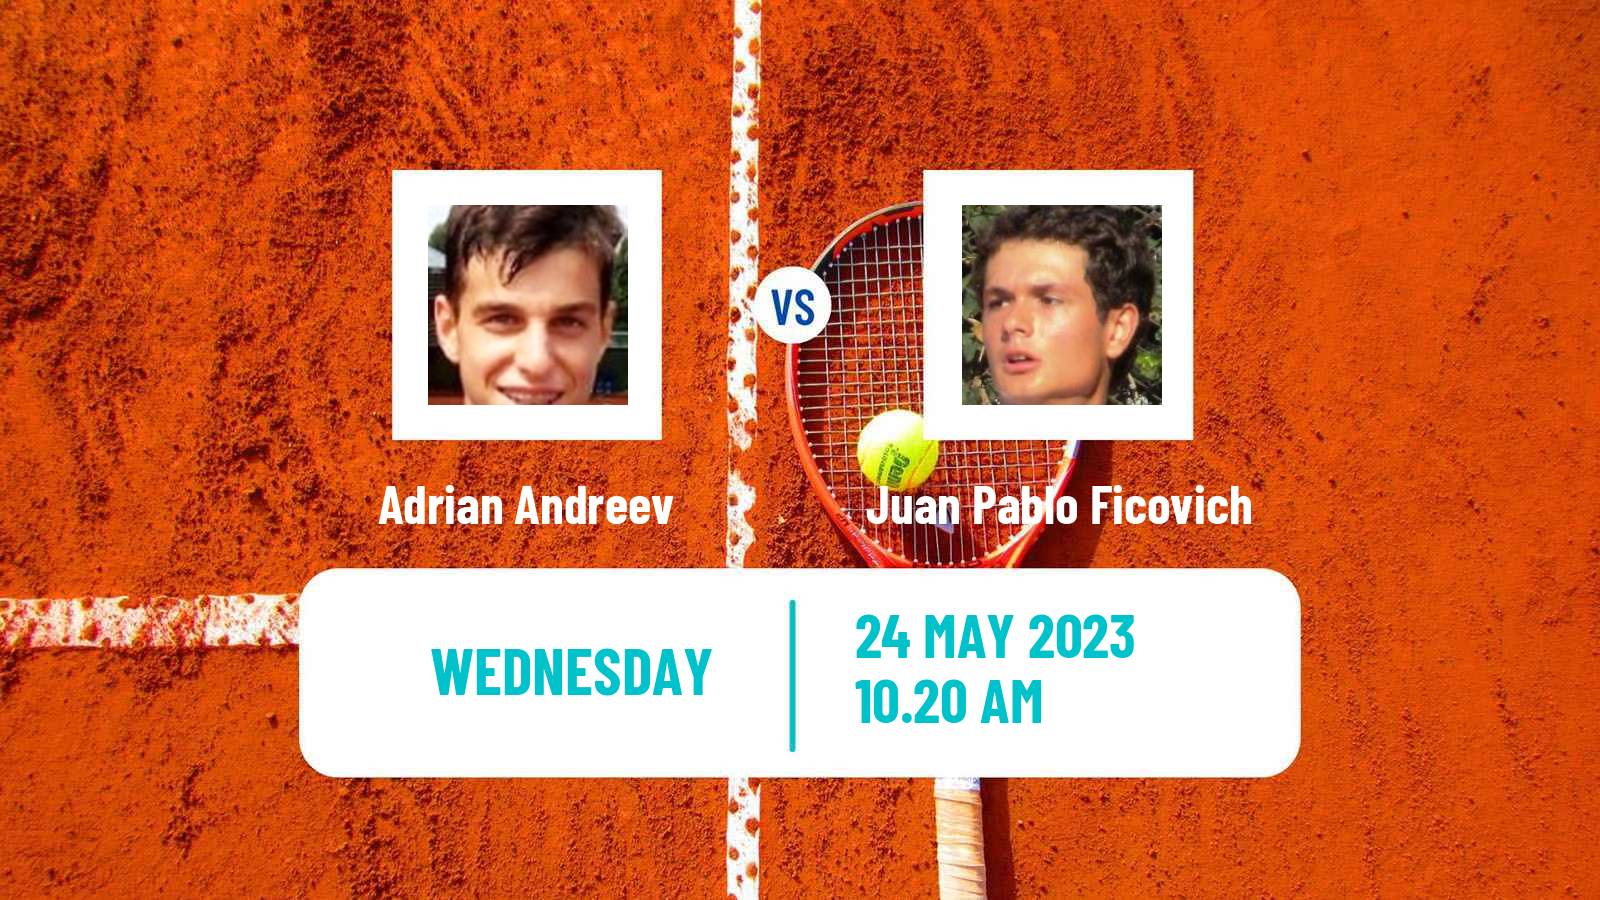 Tennis ATP Roland Garros Adrian Andreev - Juan Pablo Ficovich